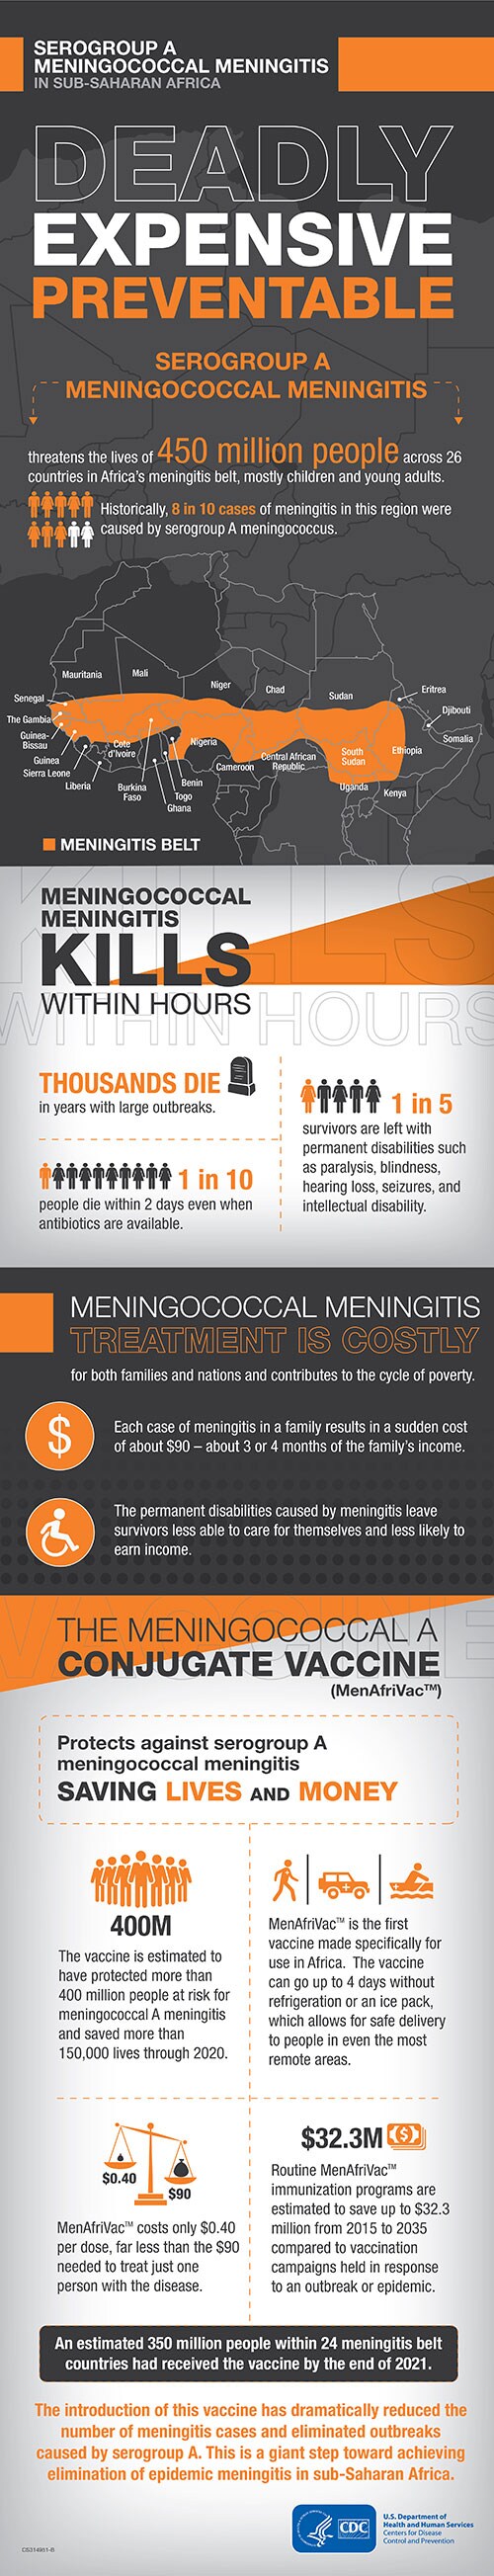 Serogroup A Meningococcal Meningitis in Sub-Saharan Africa Infographic